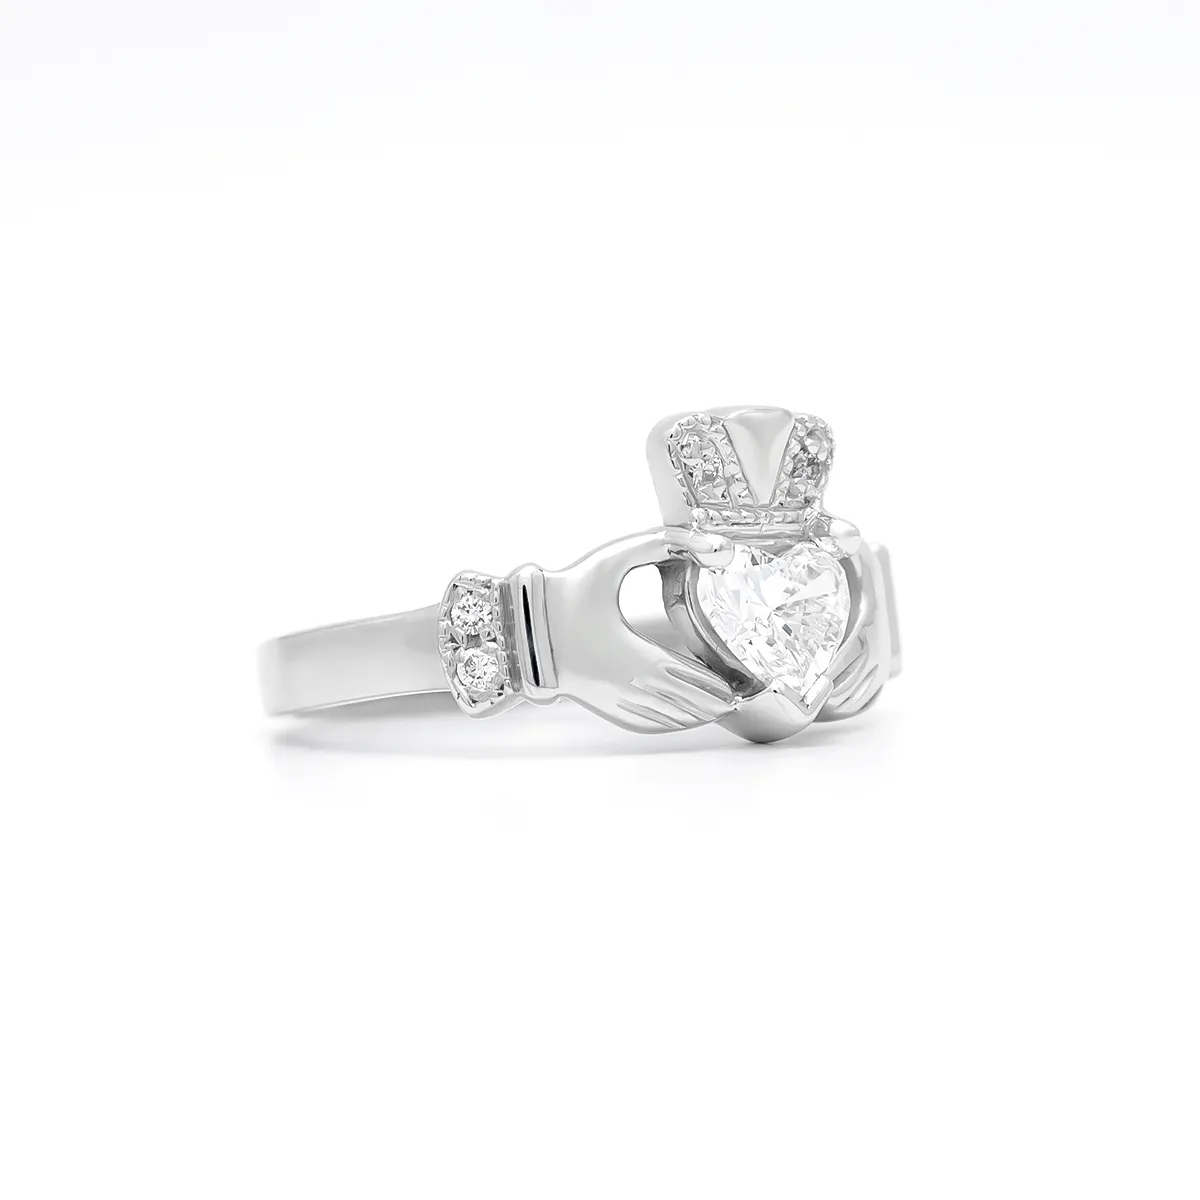 IJCR0037 Diamond White Gold Claddagh Ring 2